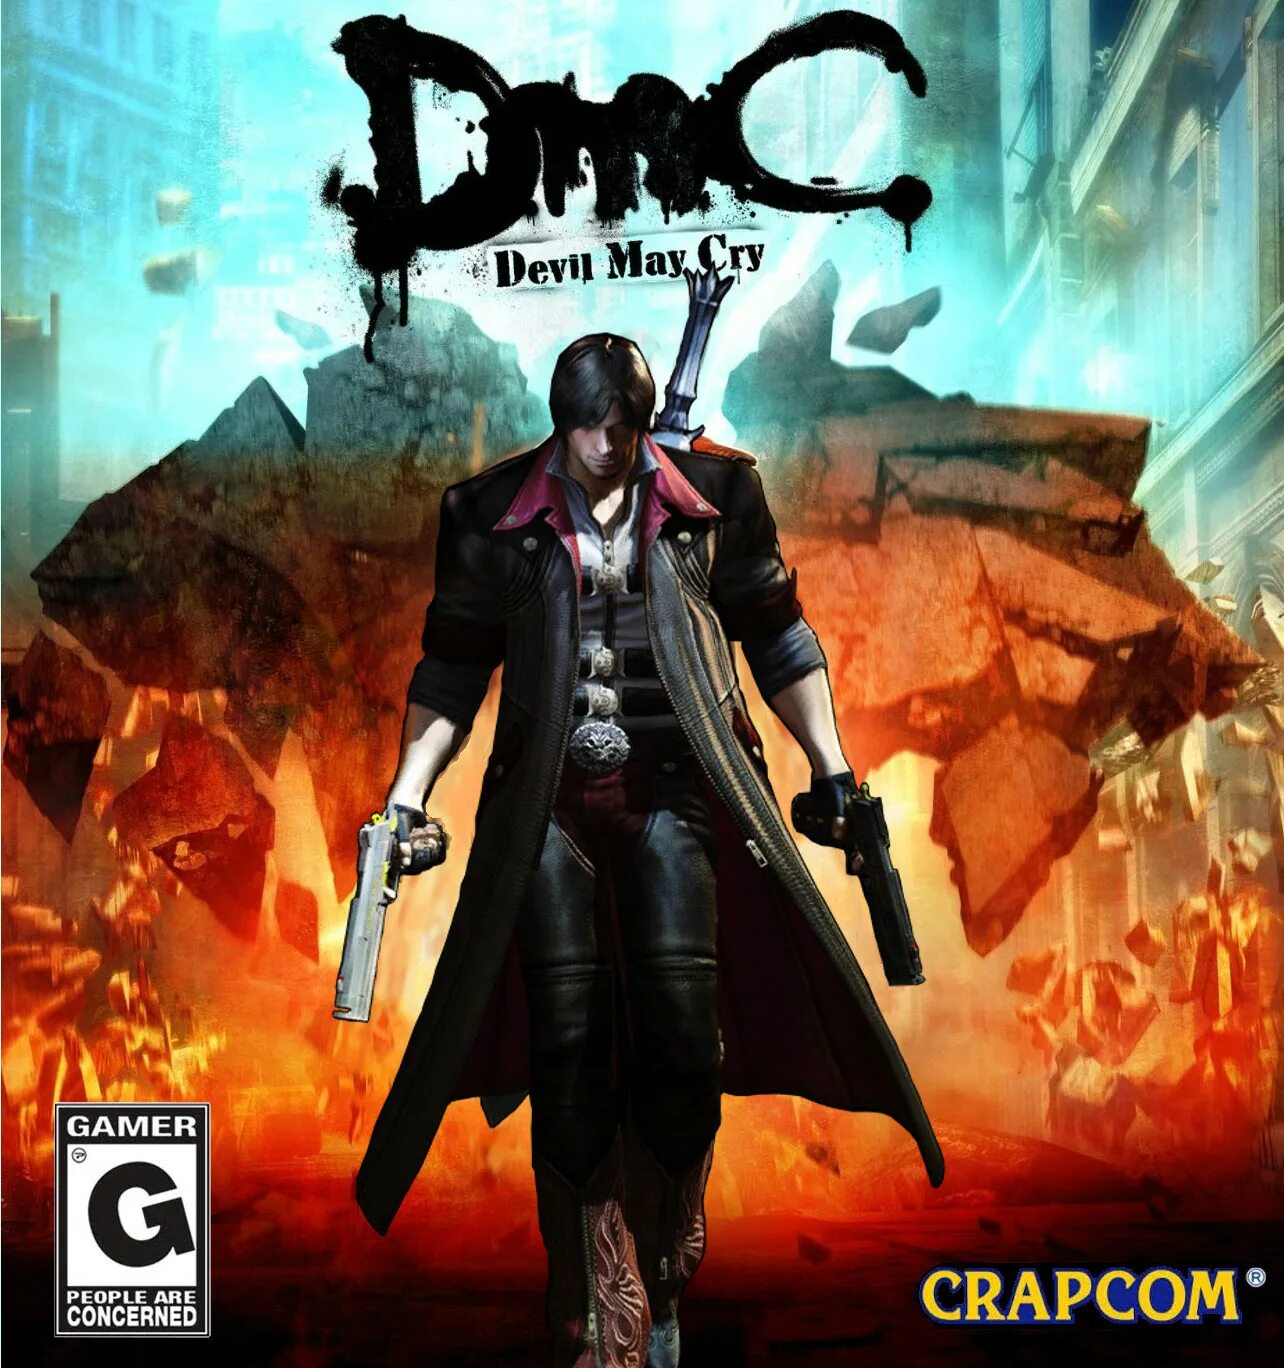 DMC: Devil May Cry. Definitive Edition. Devil my Cry Definitive Edition. Devil May Cry DMC Definitive. Dmc definitive edition